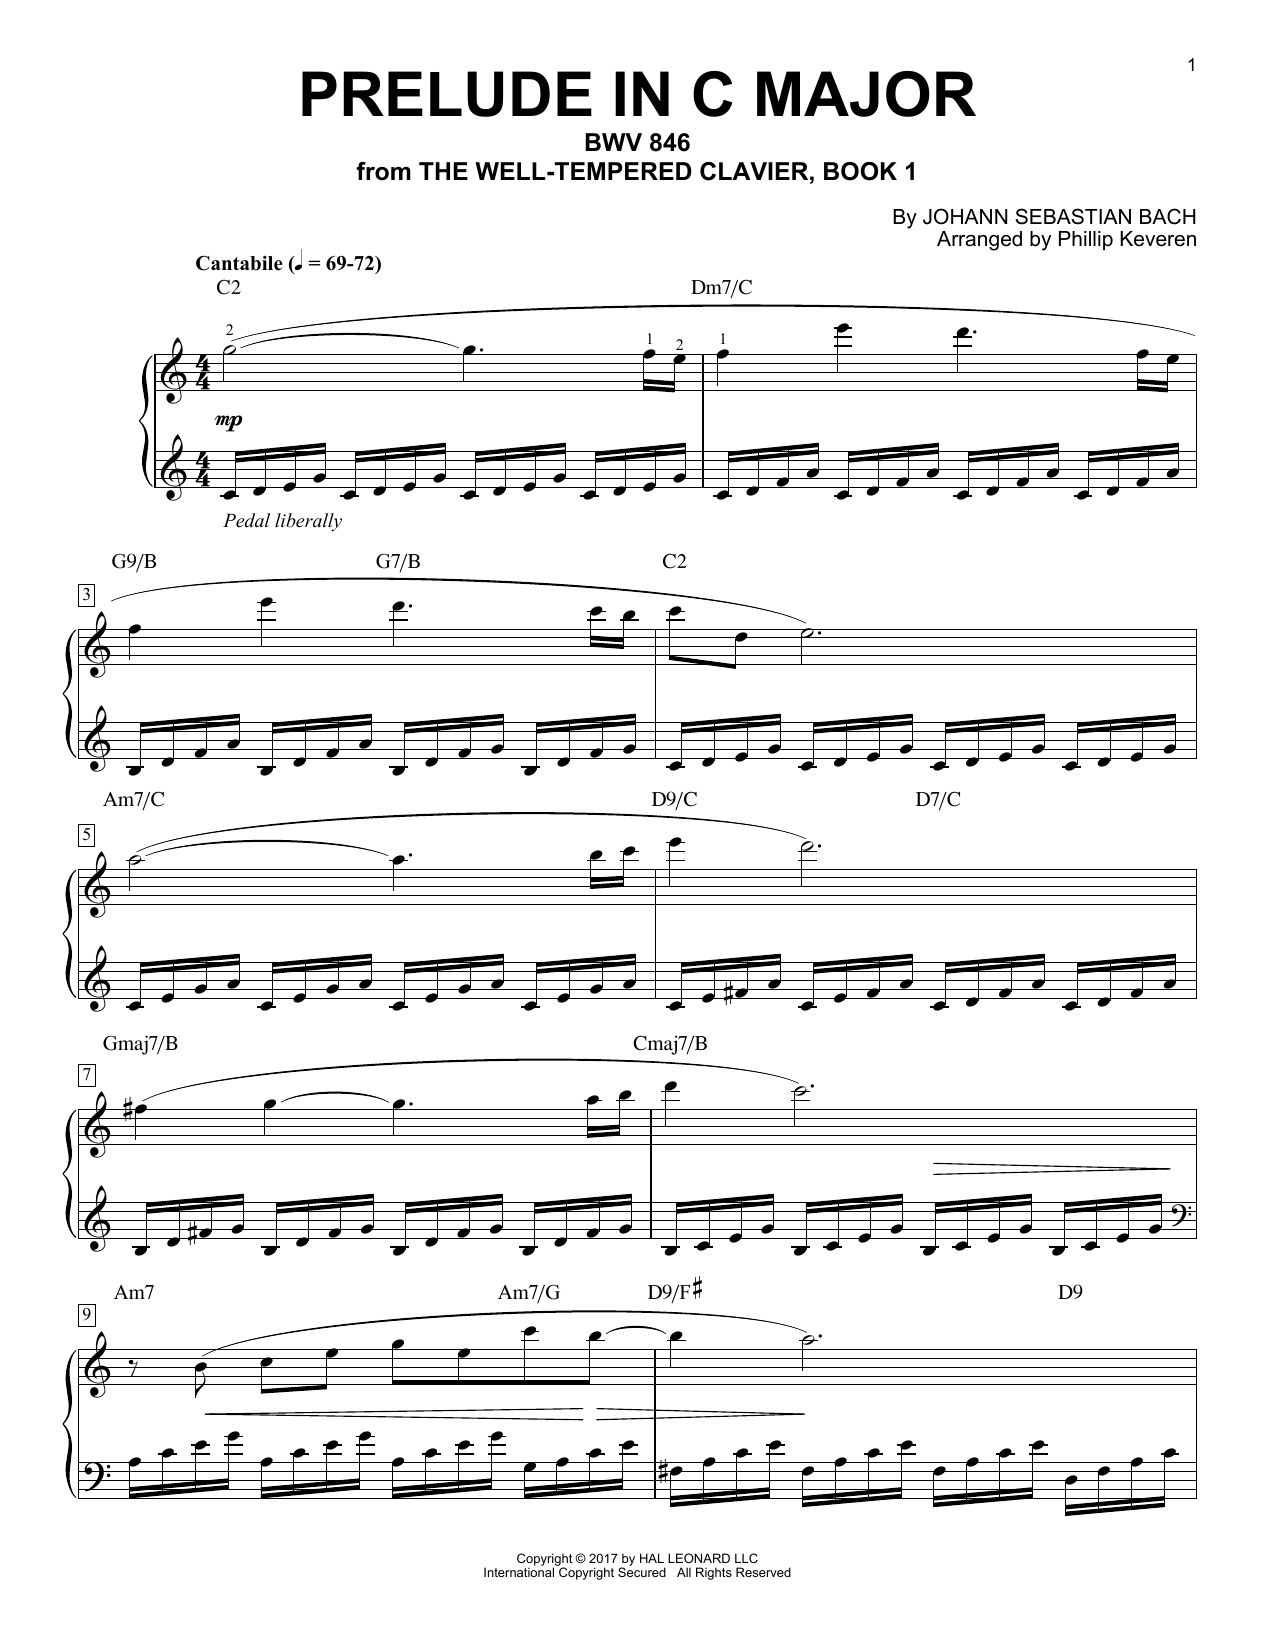 Johann Sebastian Bach Prelude In C Major, BWV 846 [Jazz version] (arr. Phillip Keveren) Sheet Music Notes & Chords for Piano - Download or Print PDF